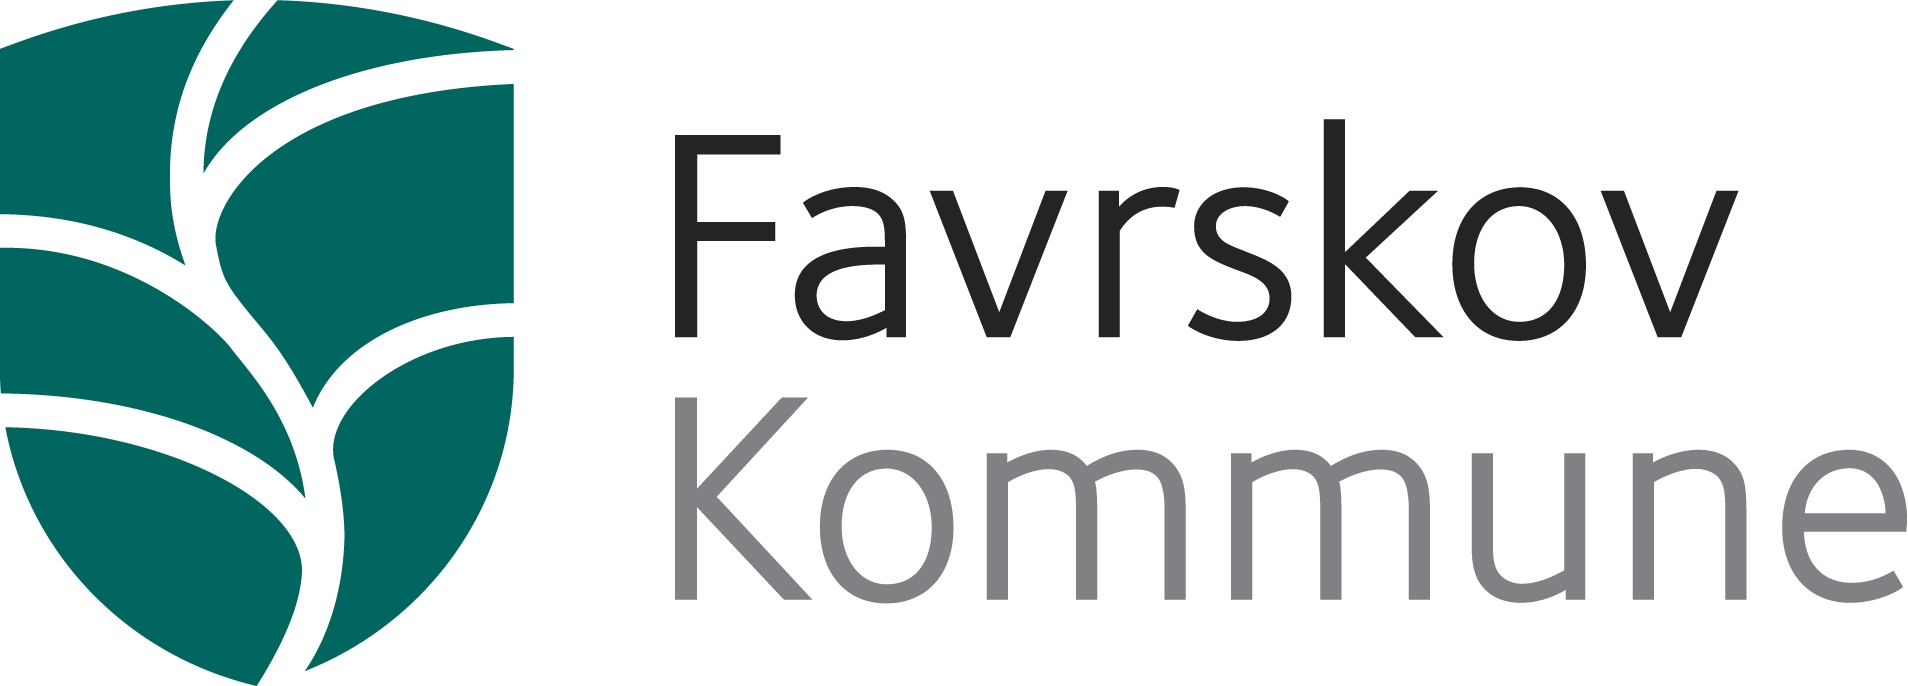 Copy of Farvskov kommune logo